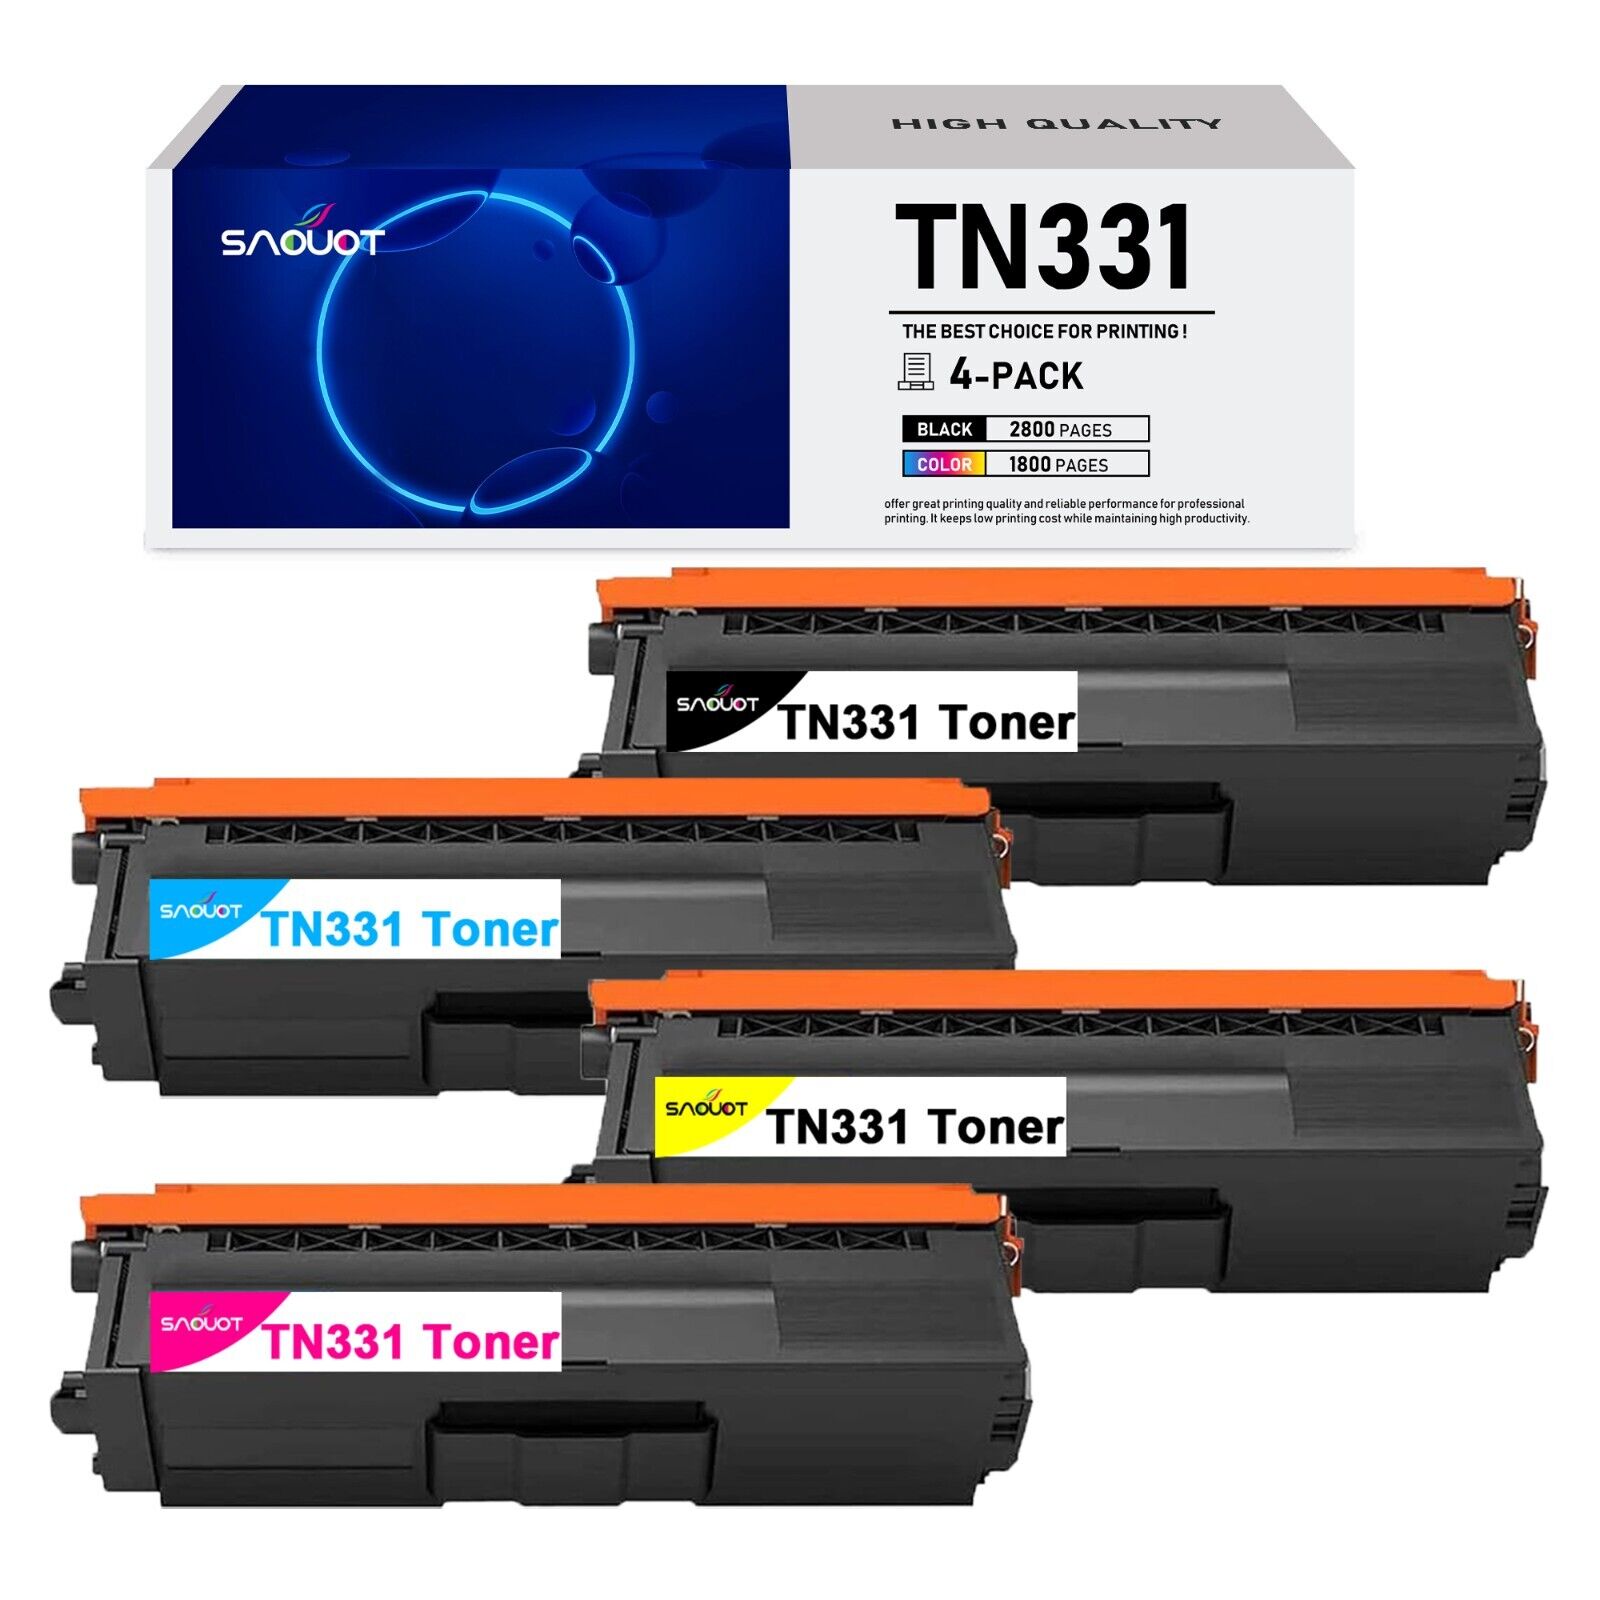 TN331 Toner Cartridges Replacement for Brother HL-L8350CDW L9200CDW L8250CDN